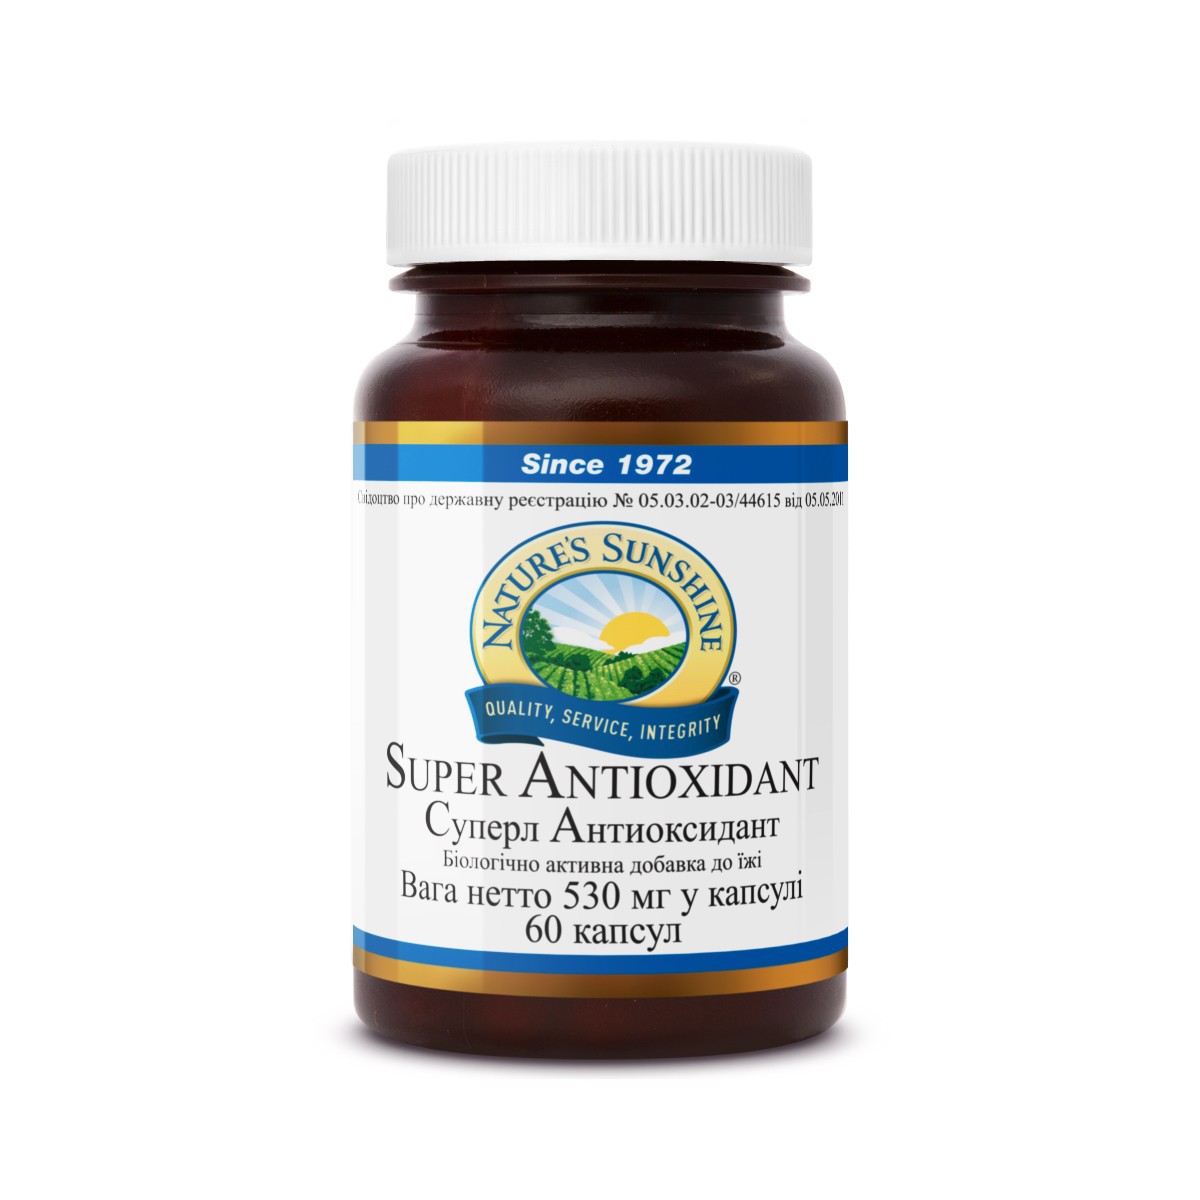 Super Antioxidant - Супер Антиоксидант - БАД Nature's Sunshine Products (NSP)